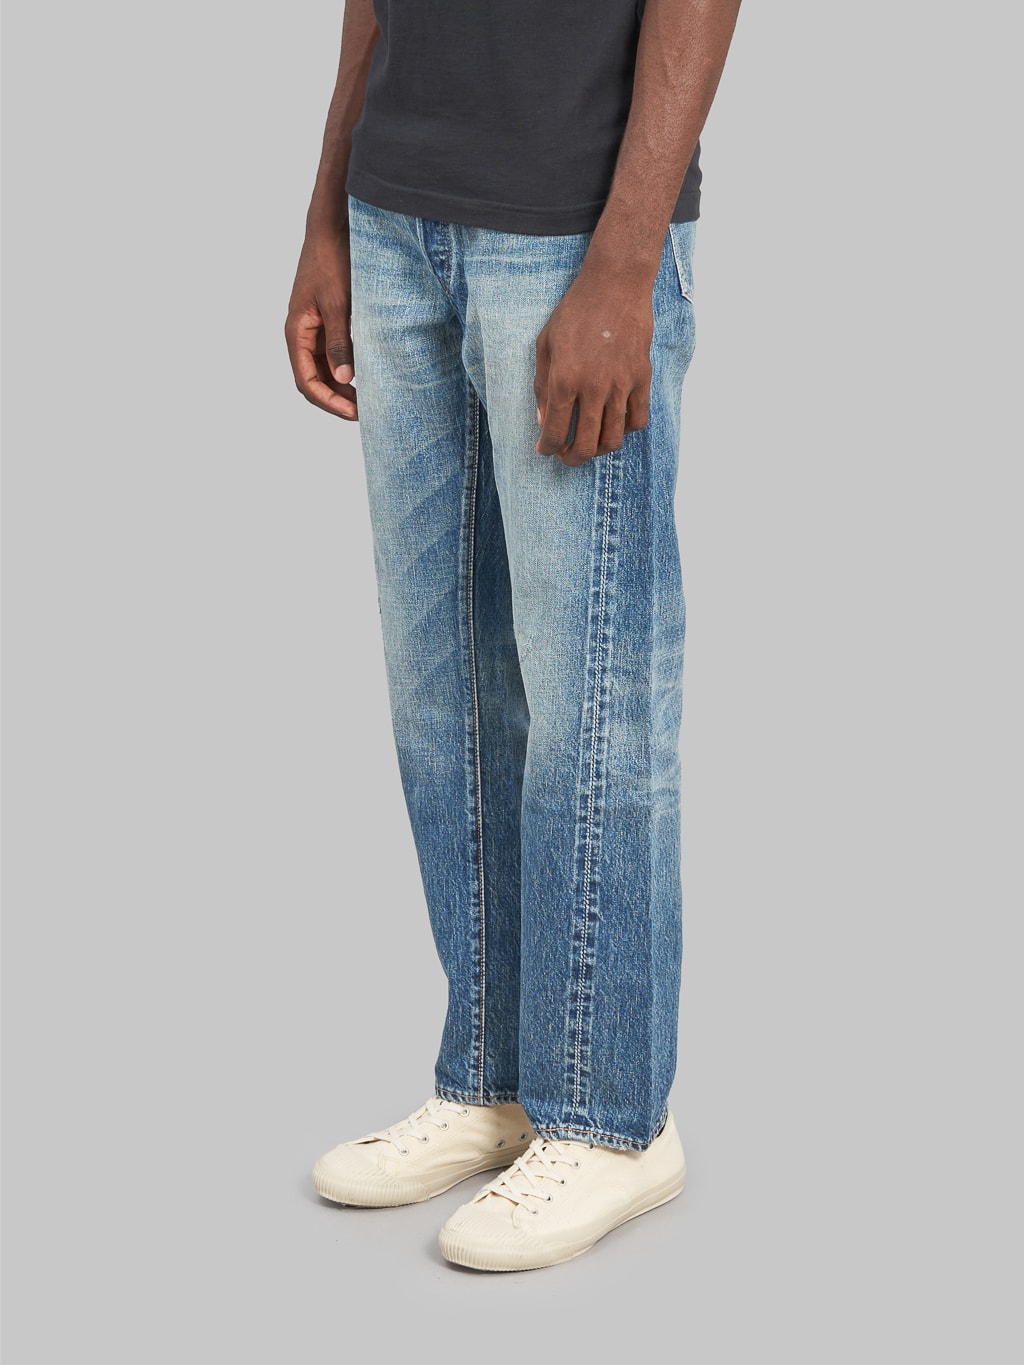 Fullcount 1101 Dartford wide Straight Jeans side fit